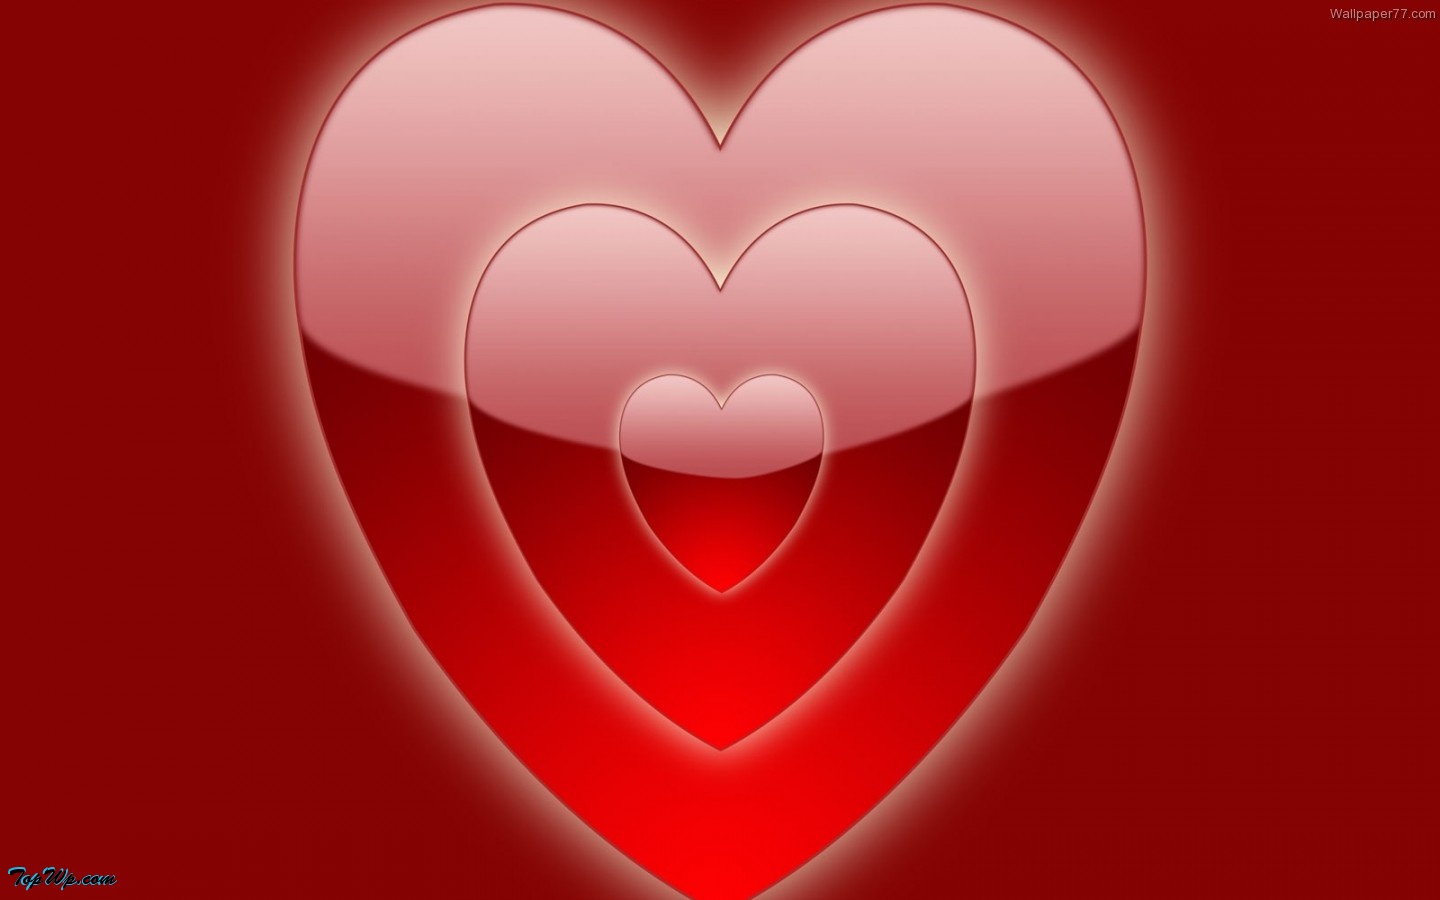 Hearts - Romantic Wallpaper (28180314) - Fanpop